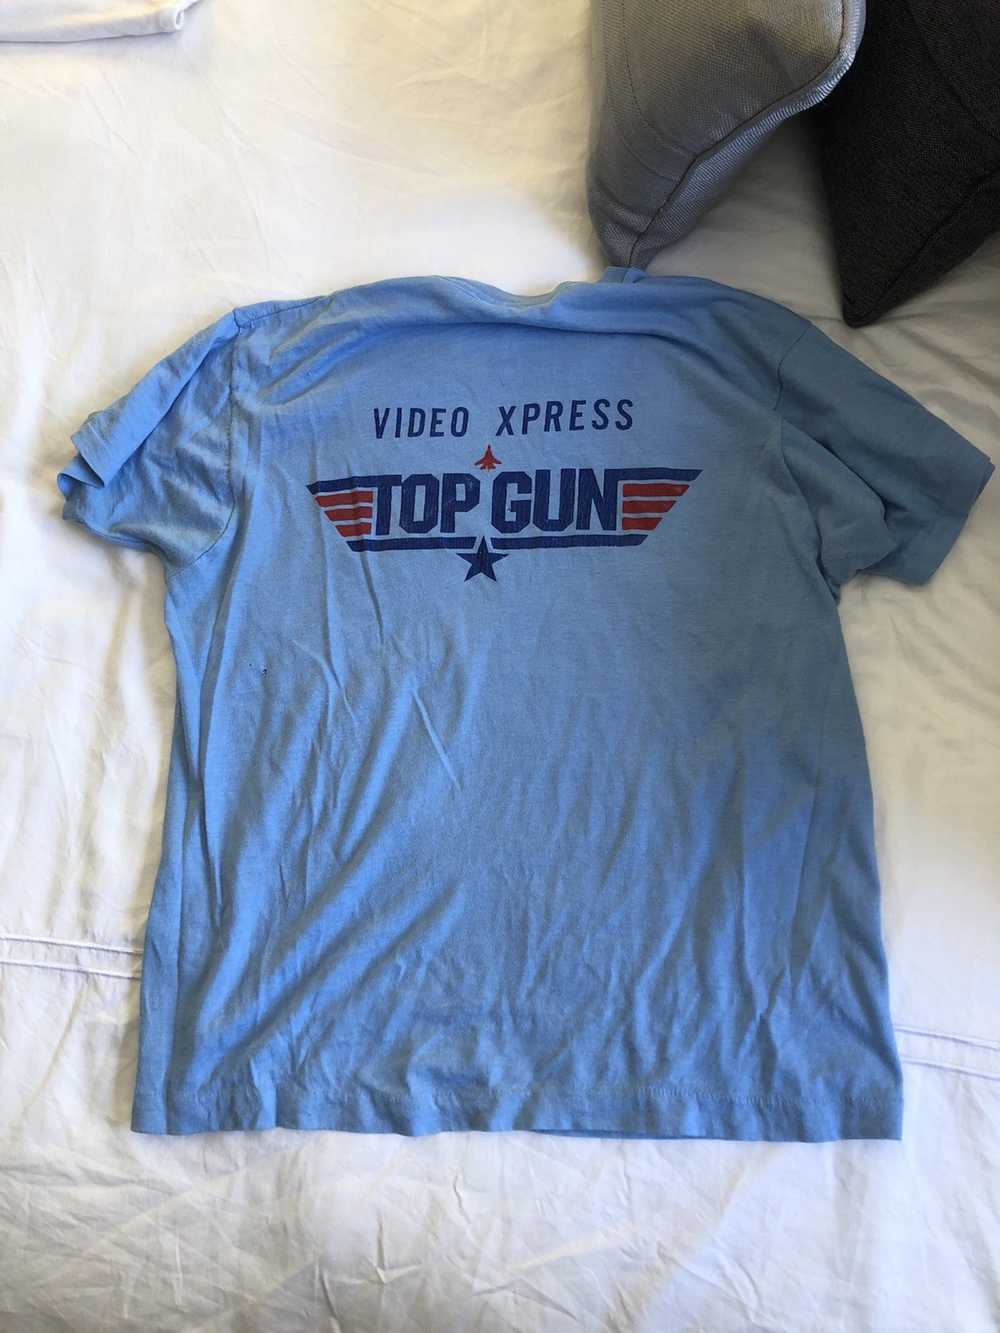 Vintage top gun video xpress tee - image 2